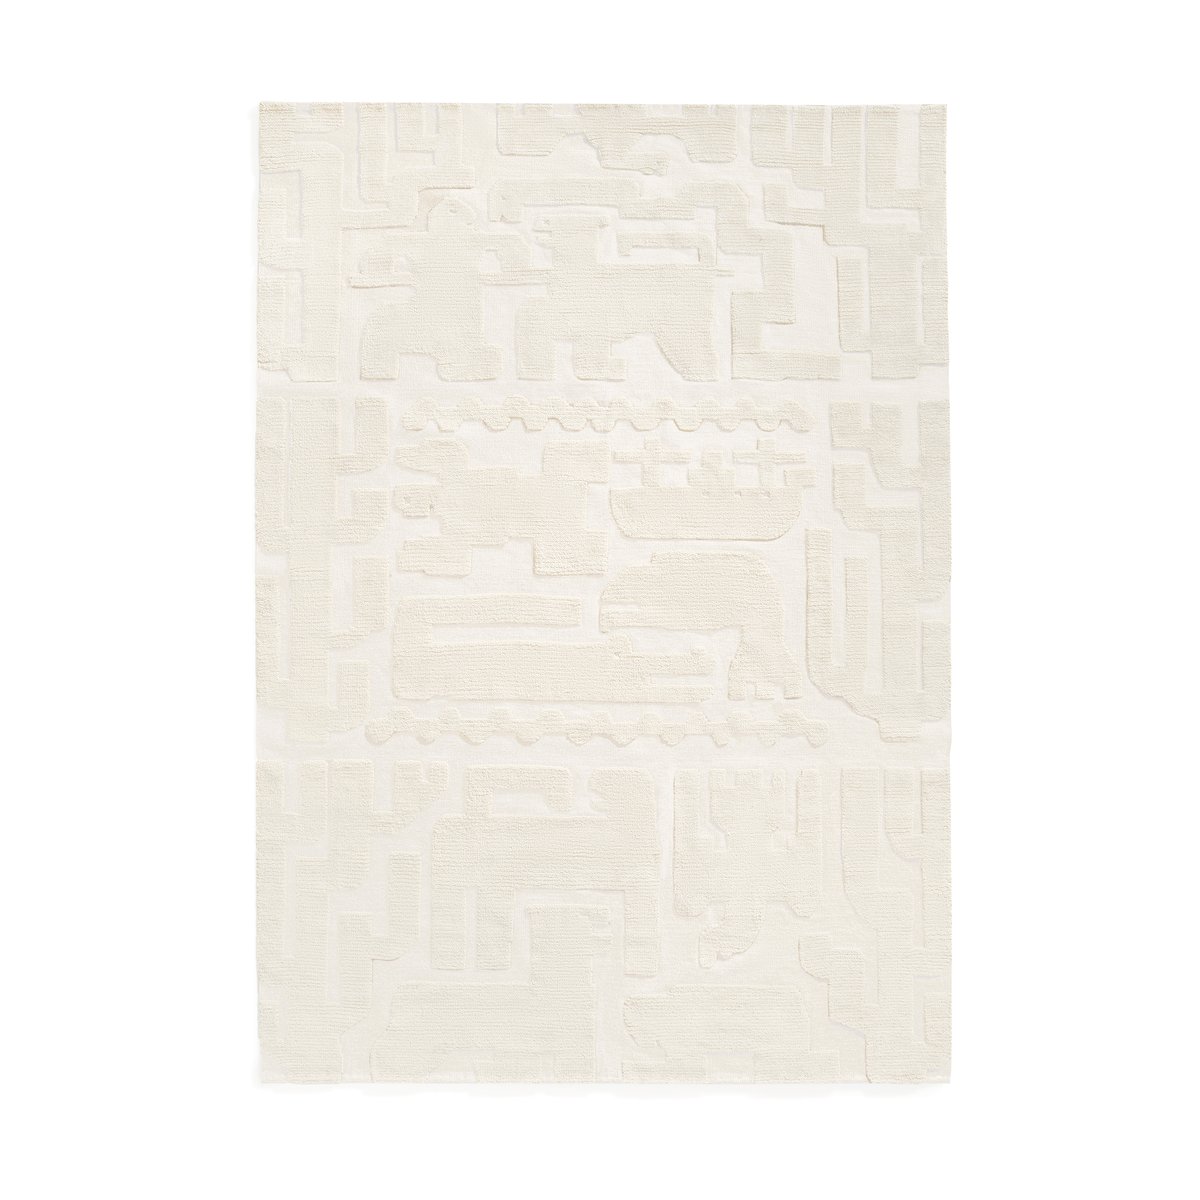 Layered Stig Lindberg Gunnel -villamatto Bone white 250 x 350 cm